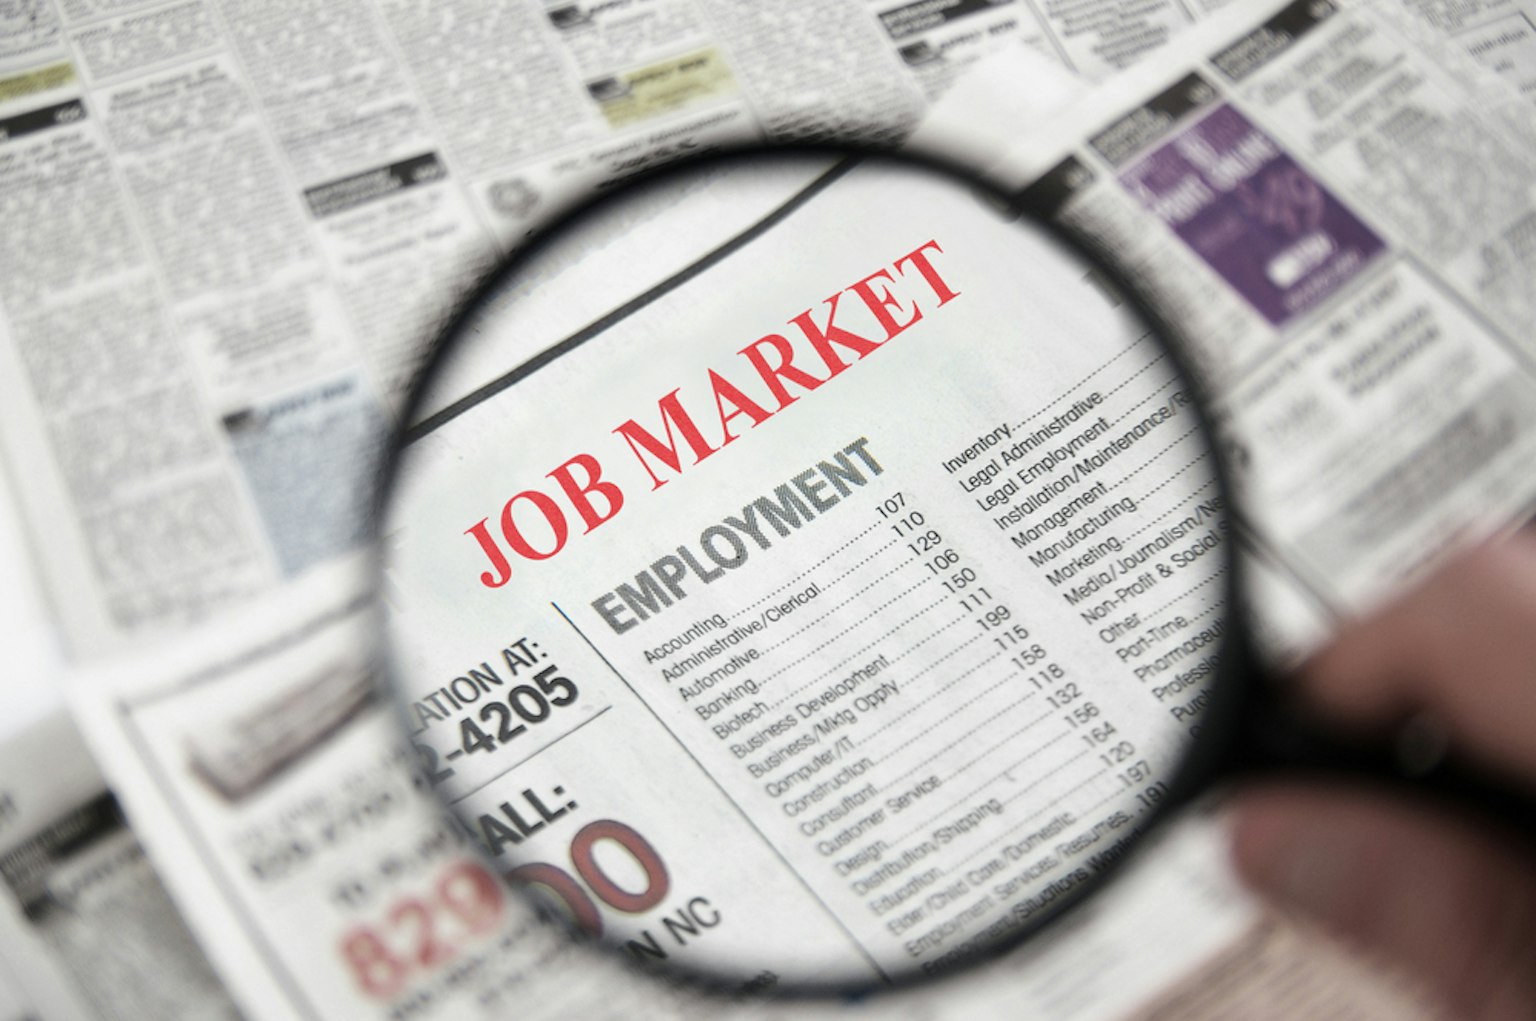 Job market job posting